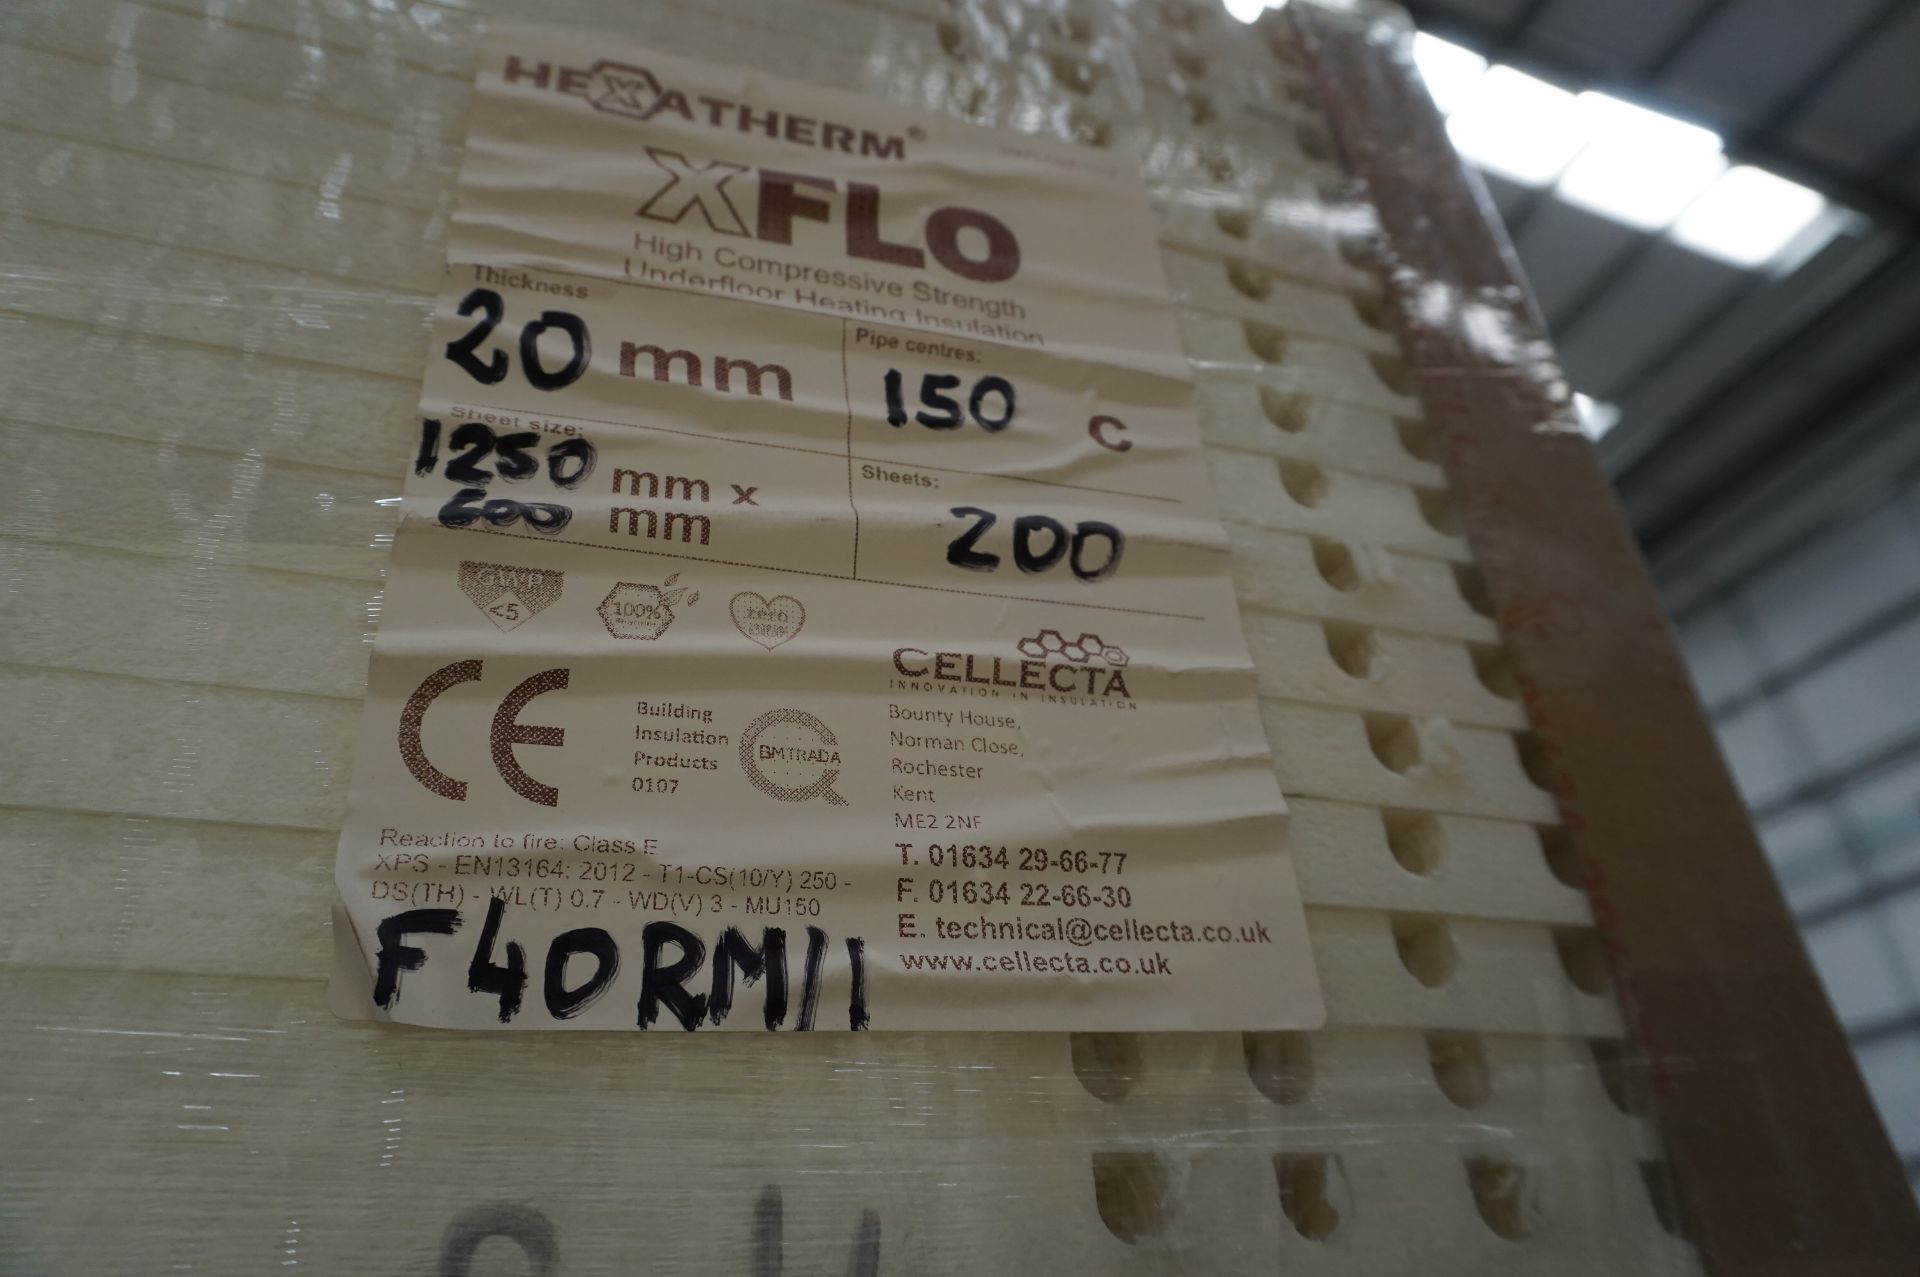 200x (no.) Cellecta, Hexatherm XFLO high compressive strength underfloor heating insulation - Image 2 of 5